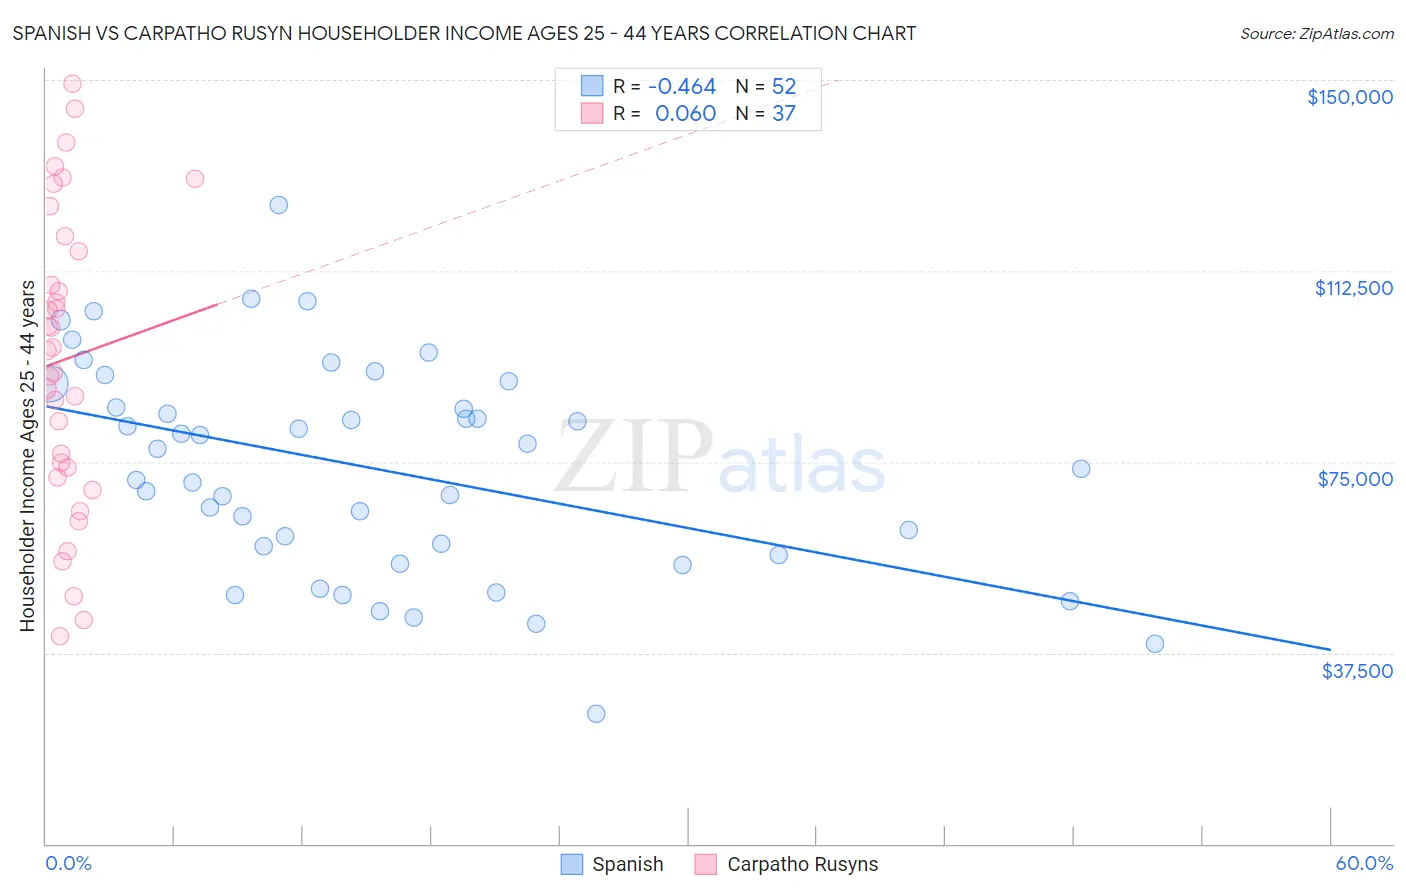 Spanish vs Carpatho Rusyn Householder Income Ages 25 - 44 years